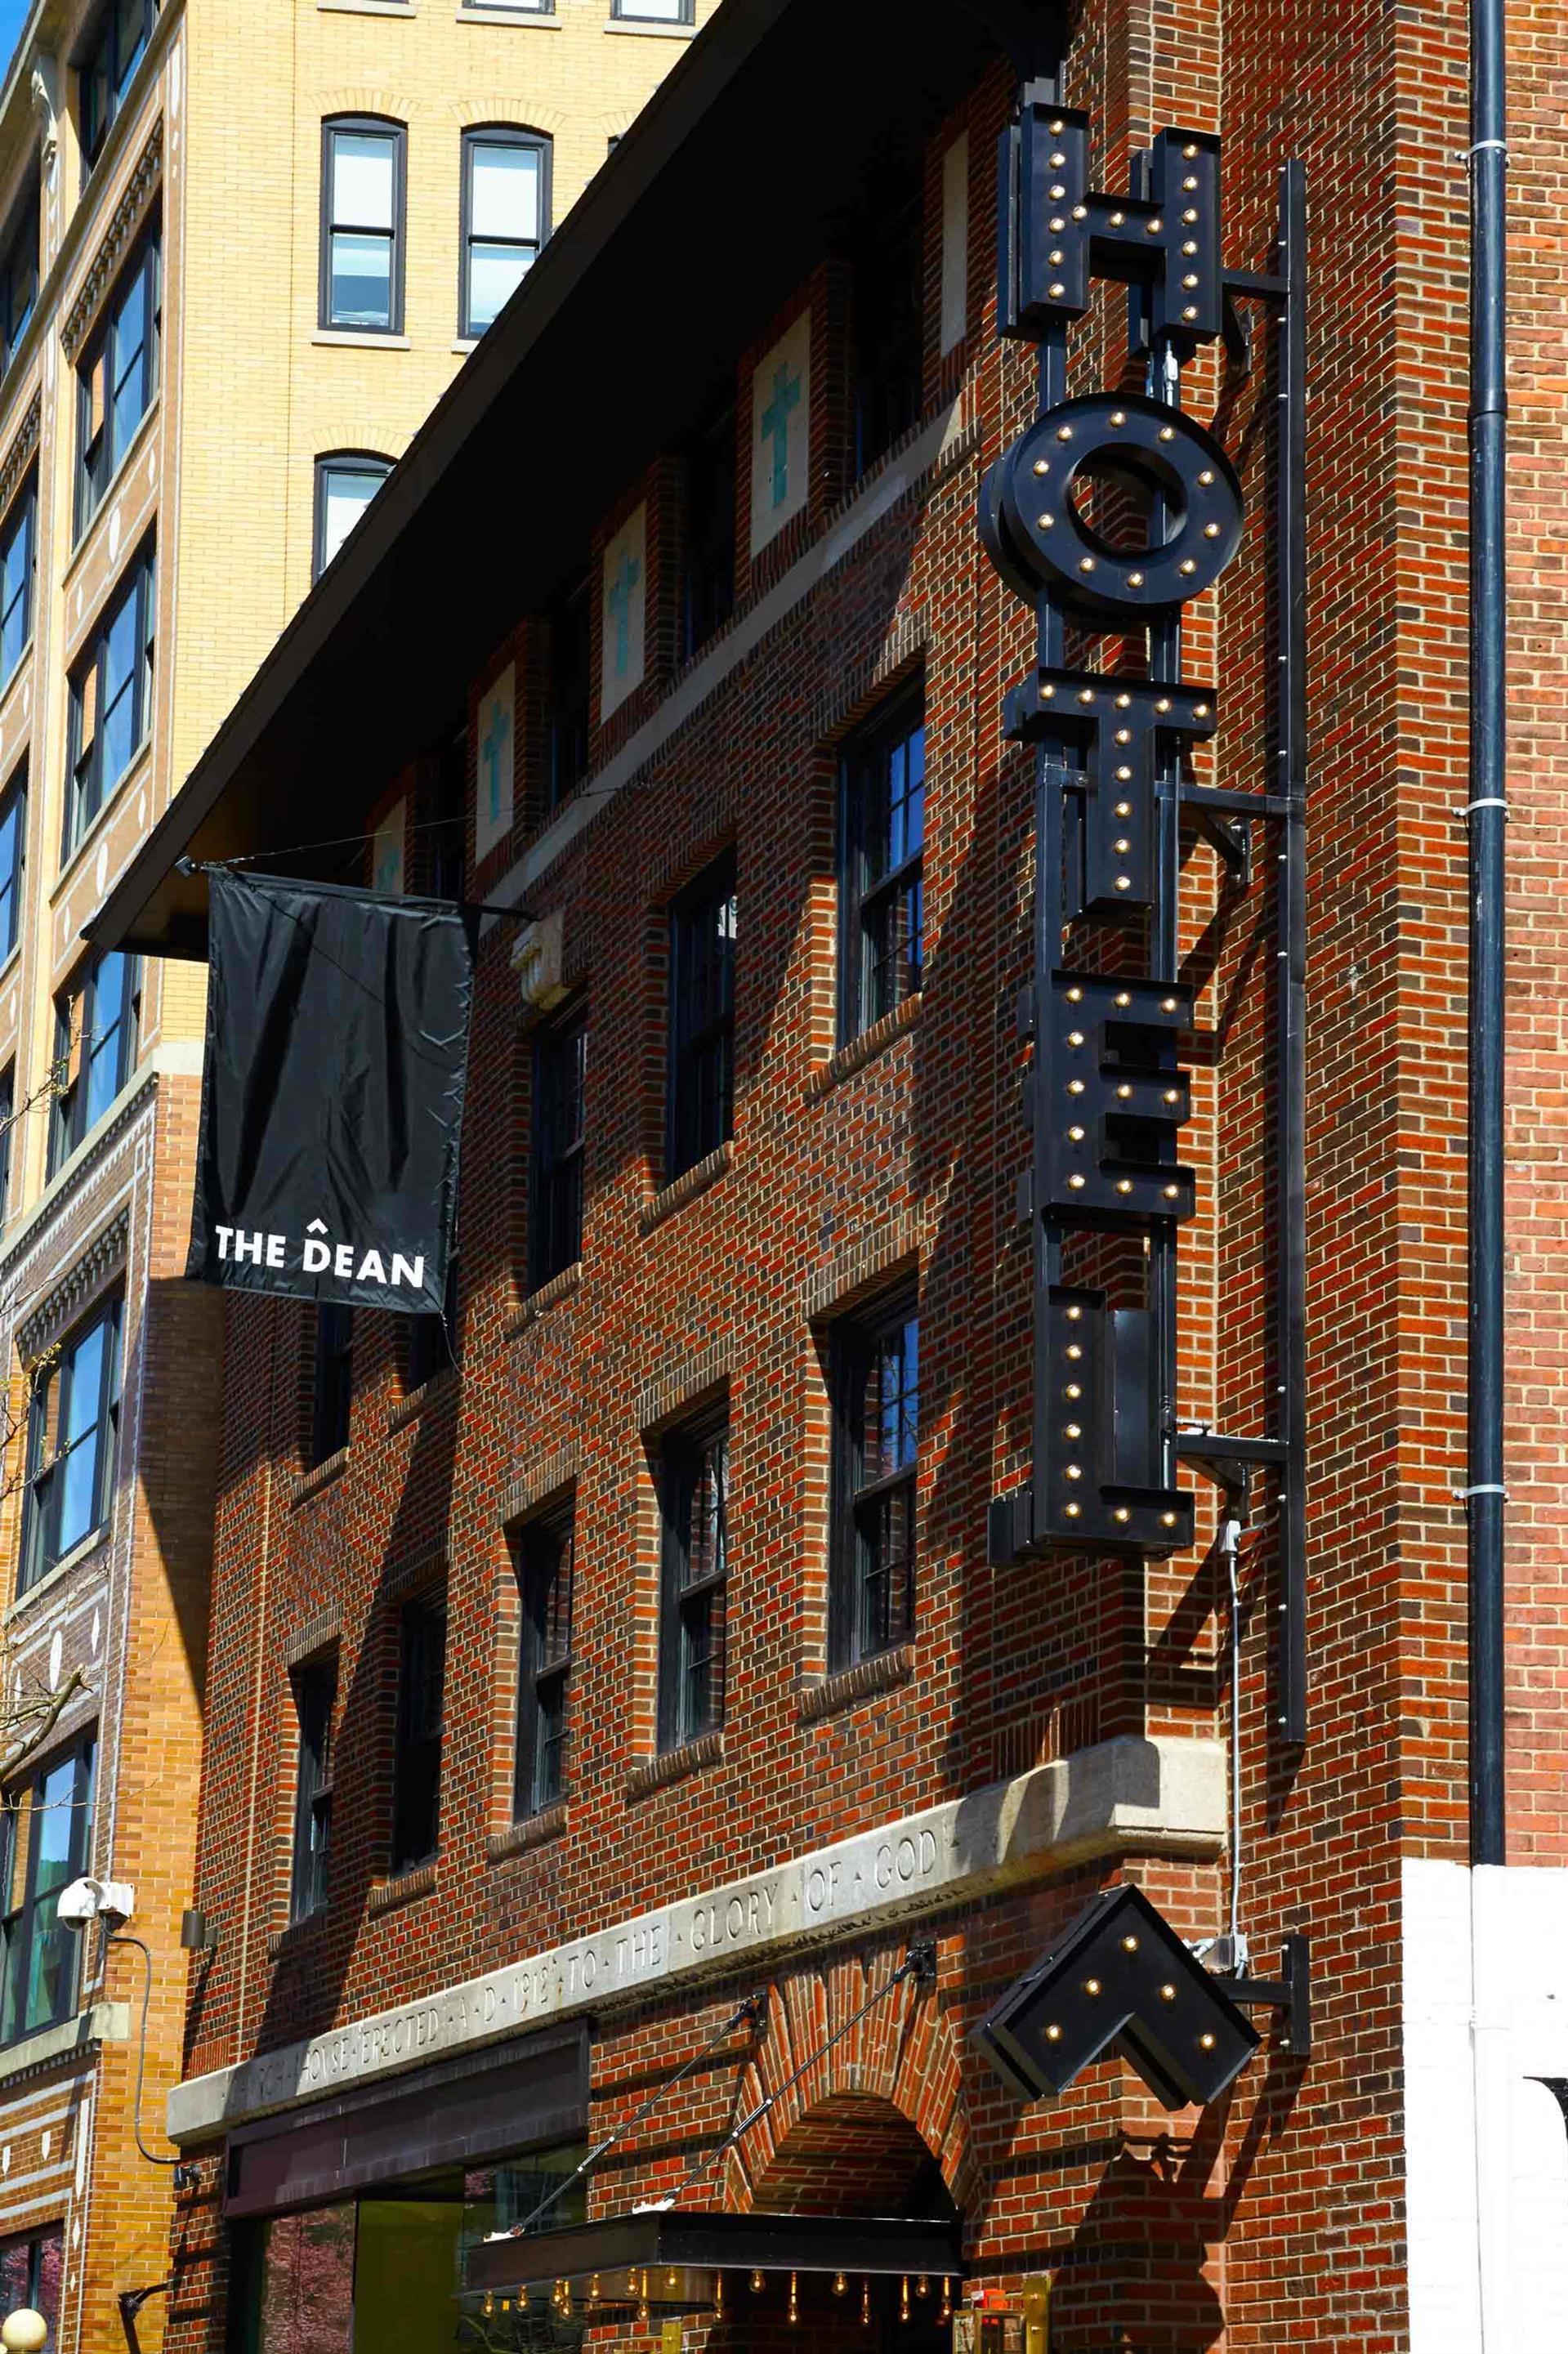 The Dean Hotel in Providence, RI